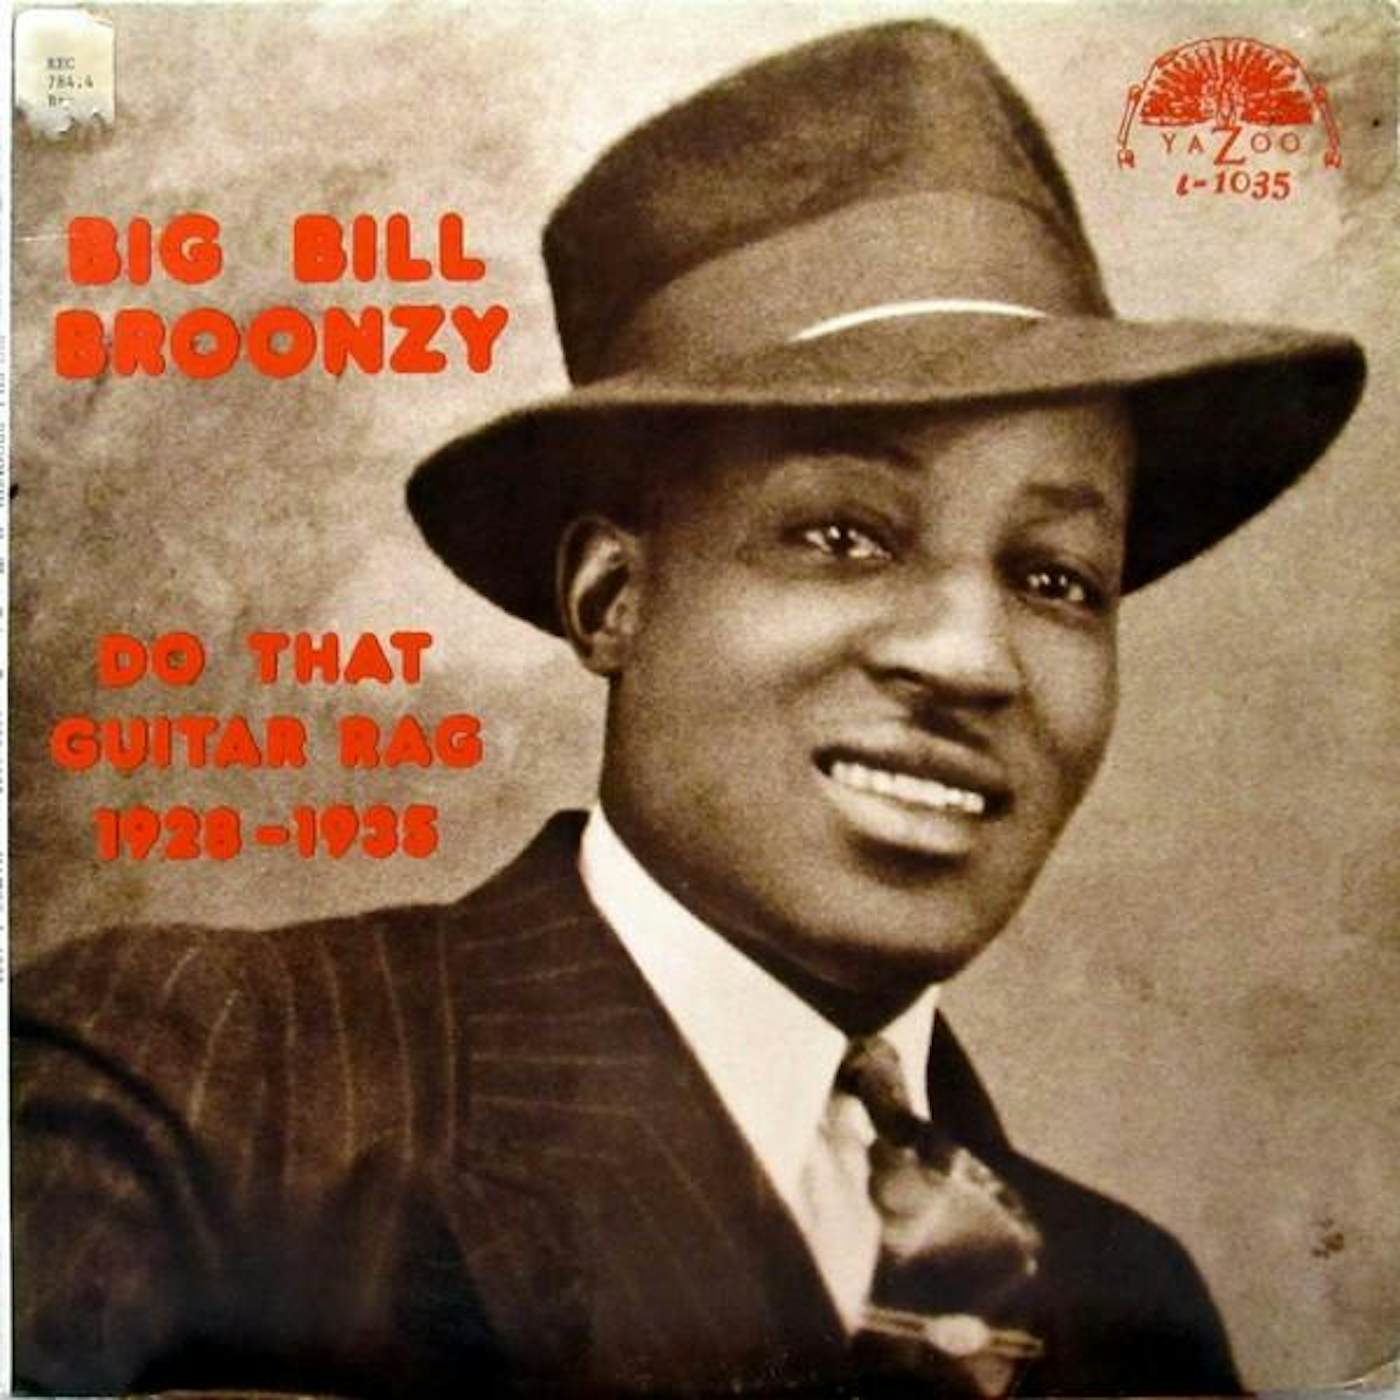 Big Bill Broonzy DO THAT GUITAR RAG 1928 - 1935 Vinyl Record